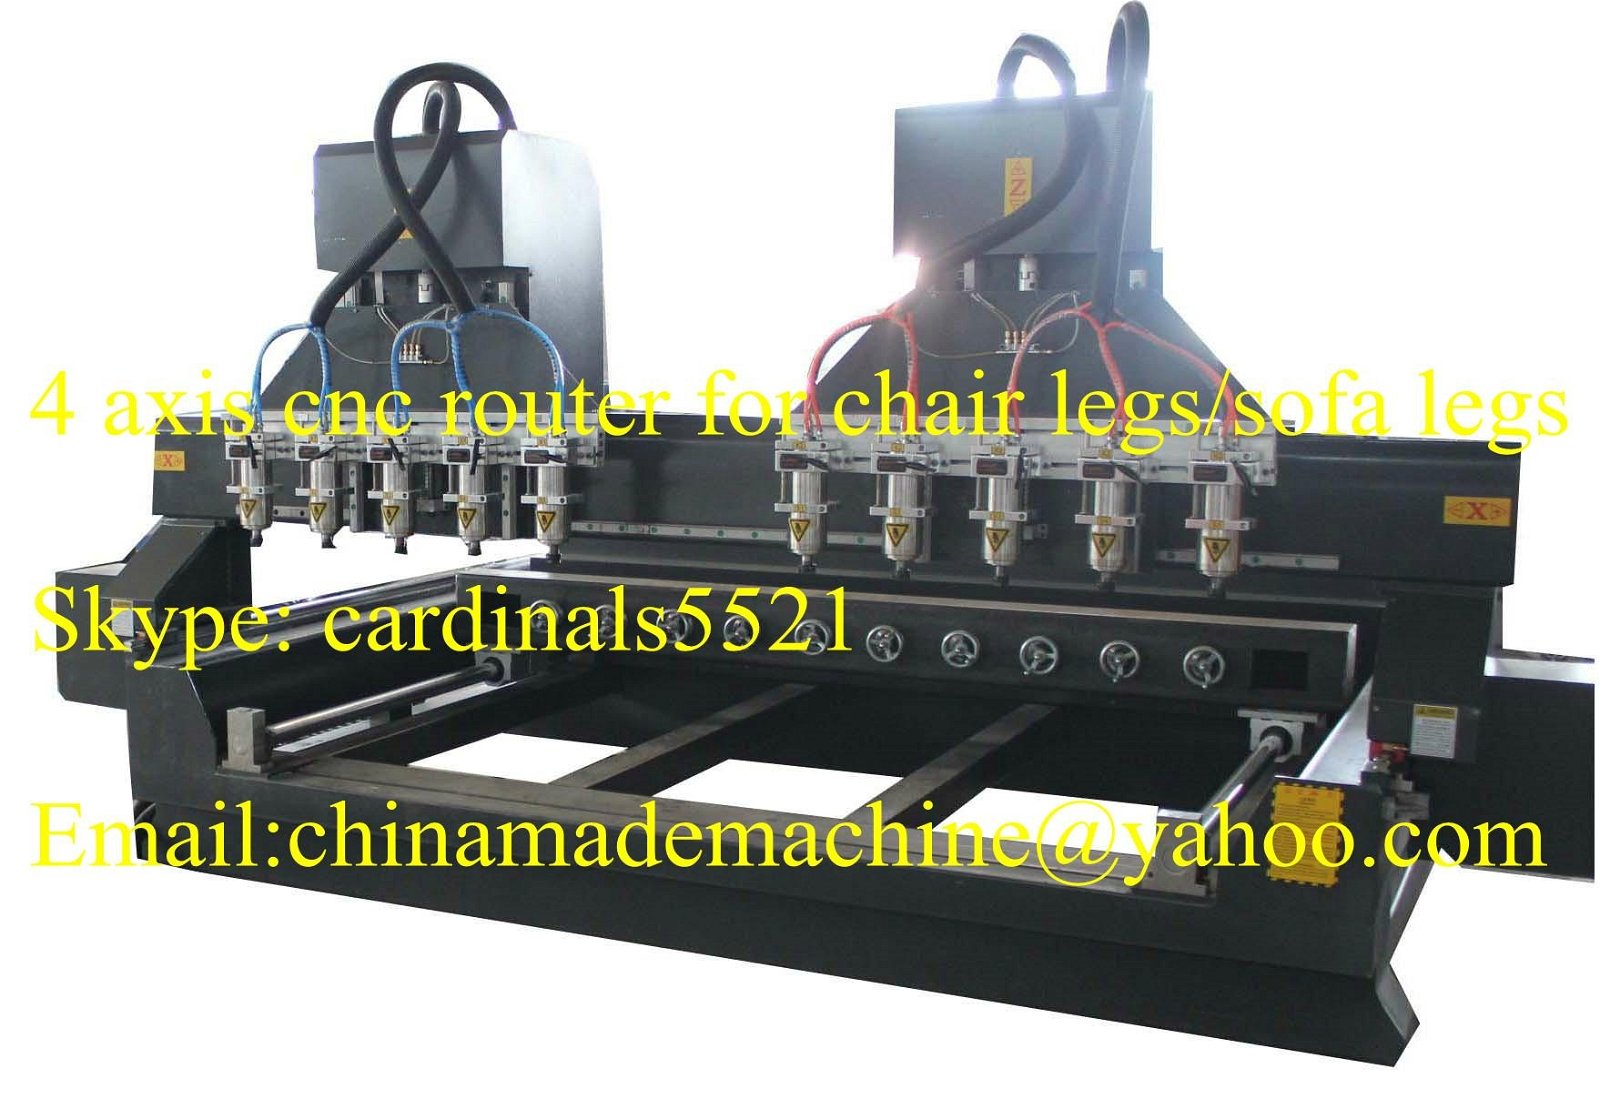 4 axis wood cnc router for chair legs/ sofa legs